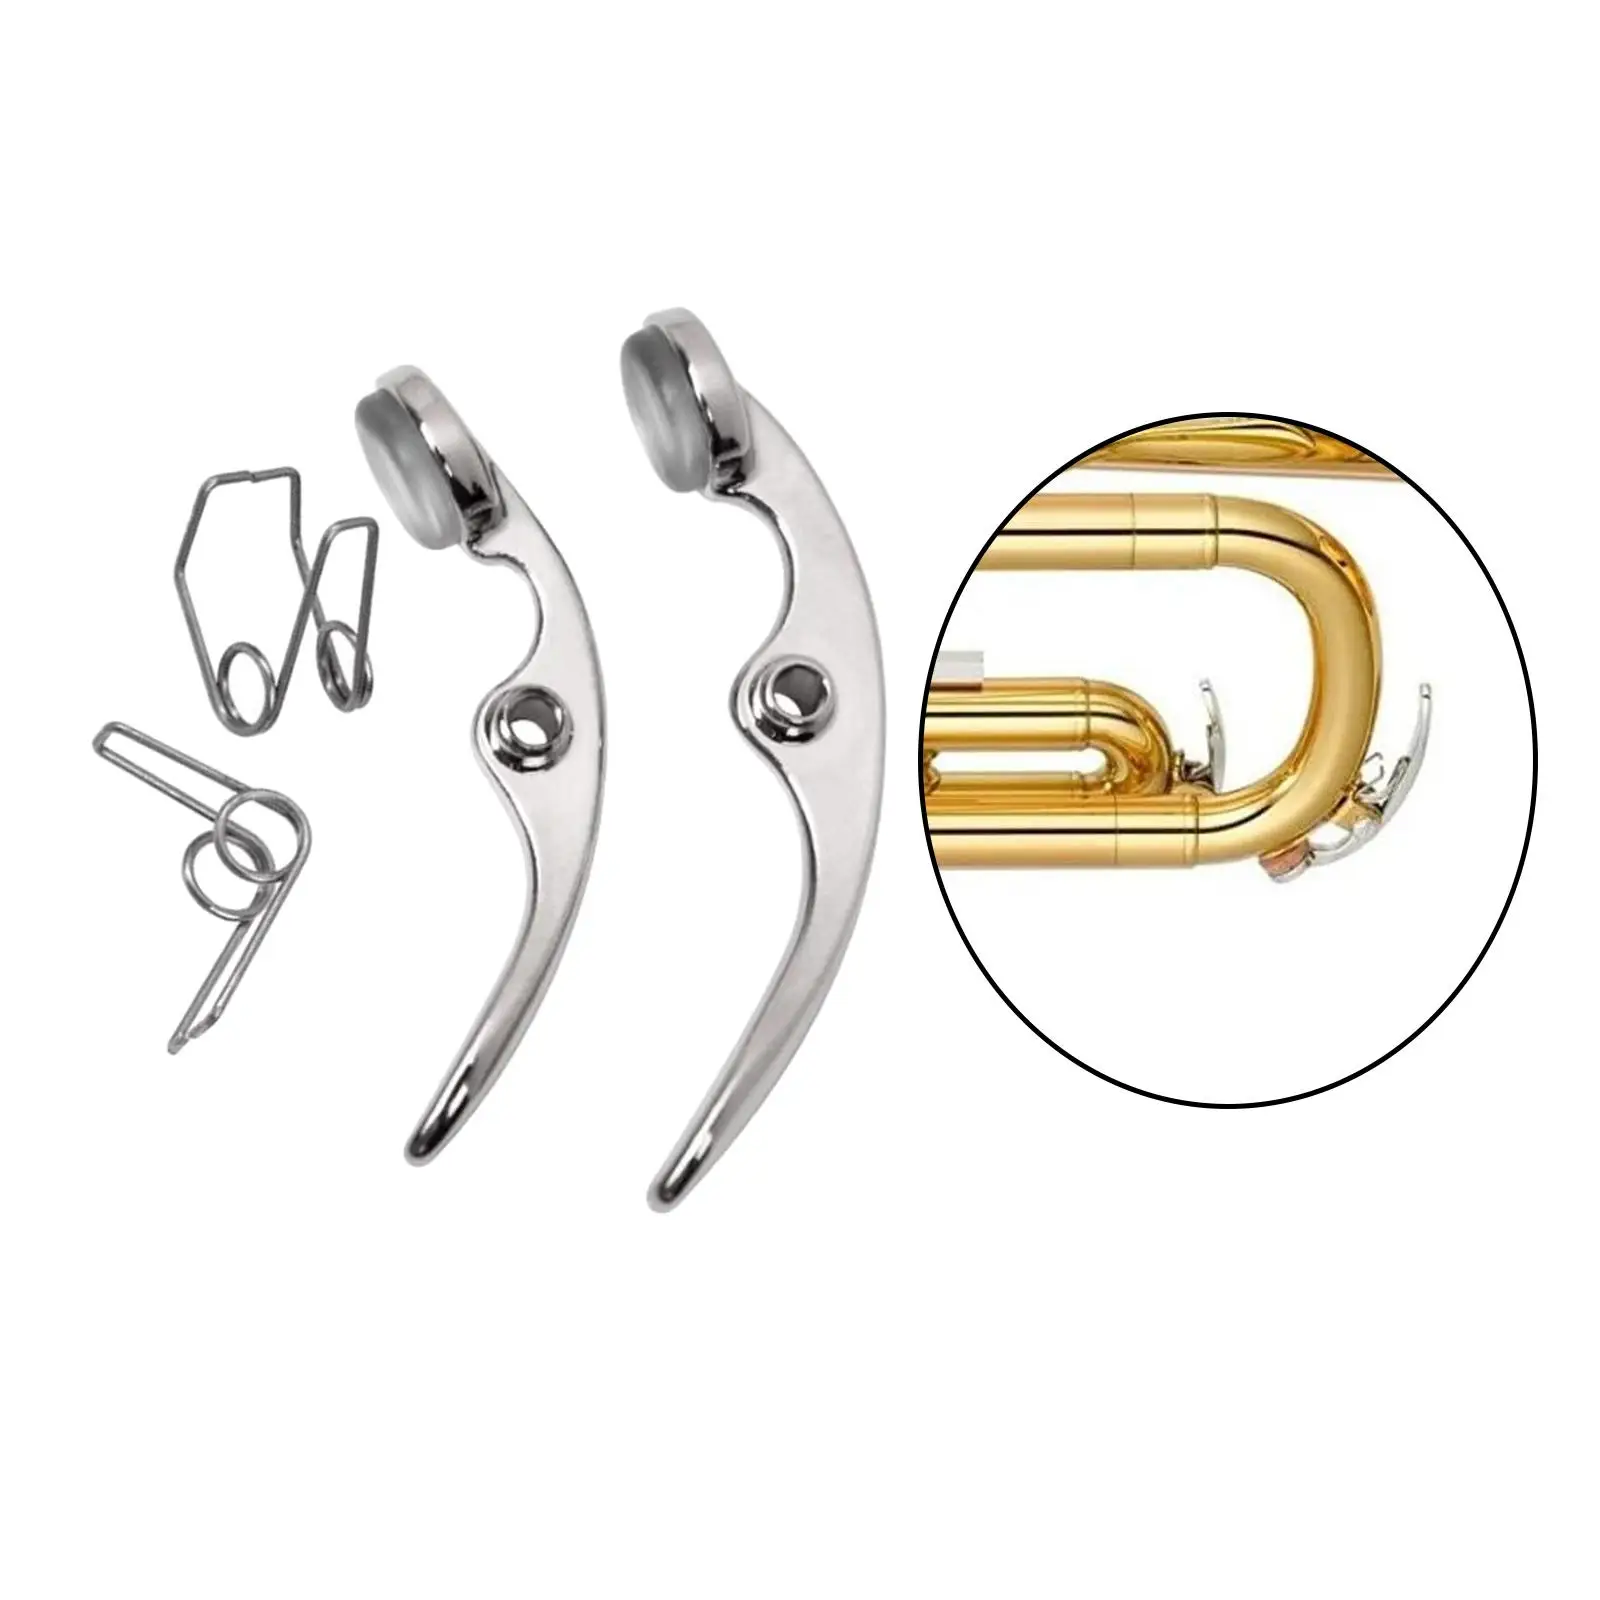 Trumpet Water Key Valve Repair Kits, Wind Instruments Accessory, Drain Valve Key